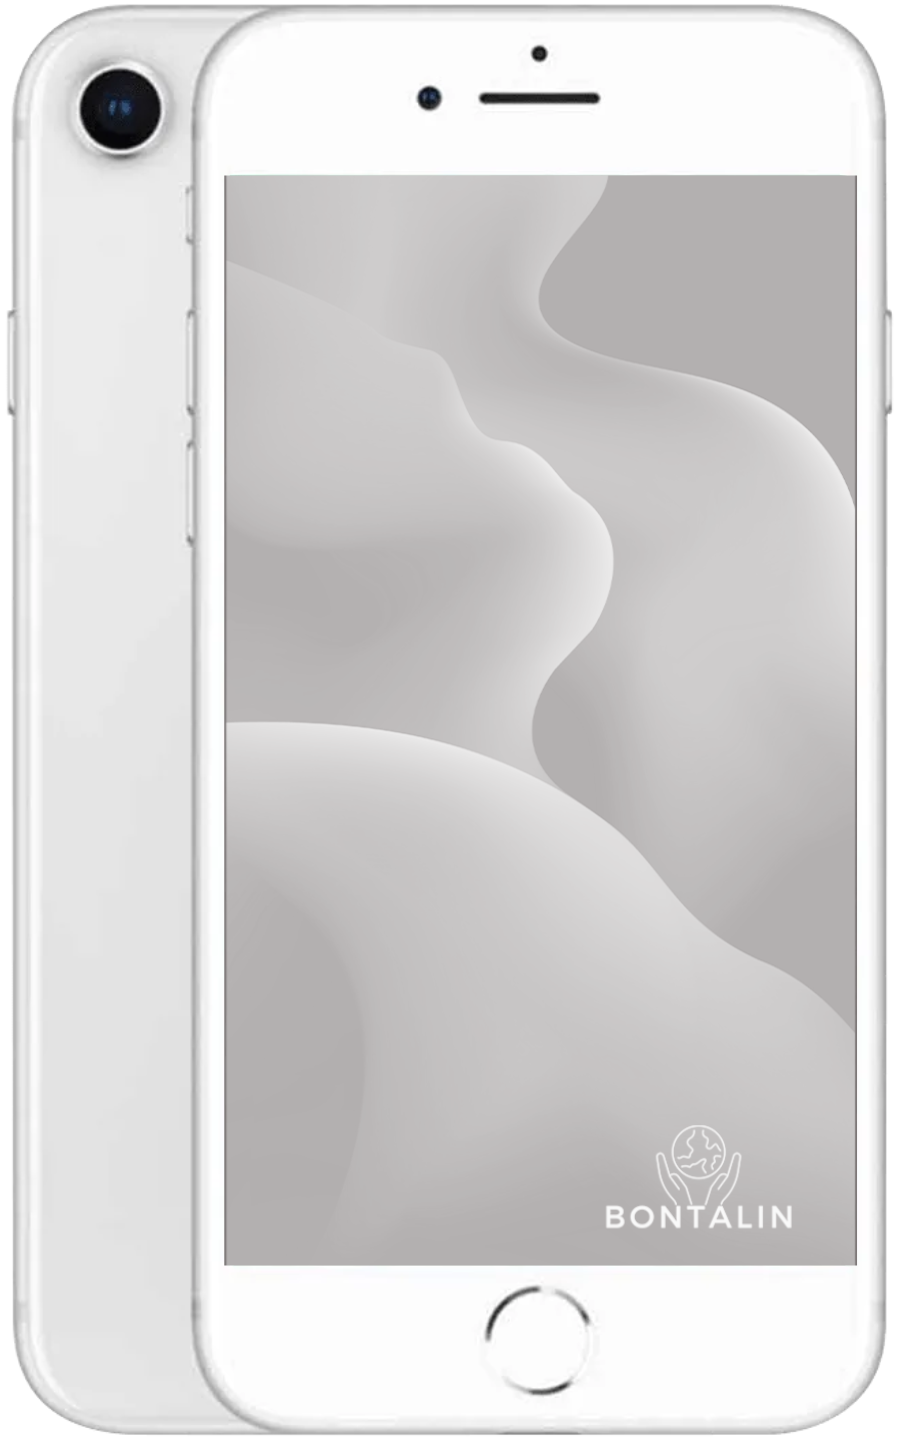 iPhone 8 - Generalüberholt - Bontalin refurb